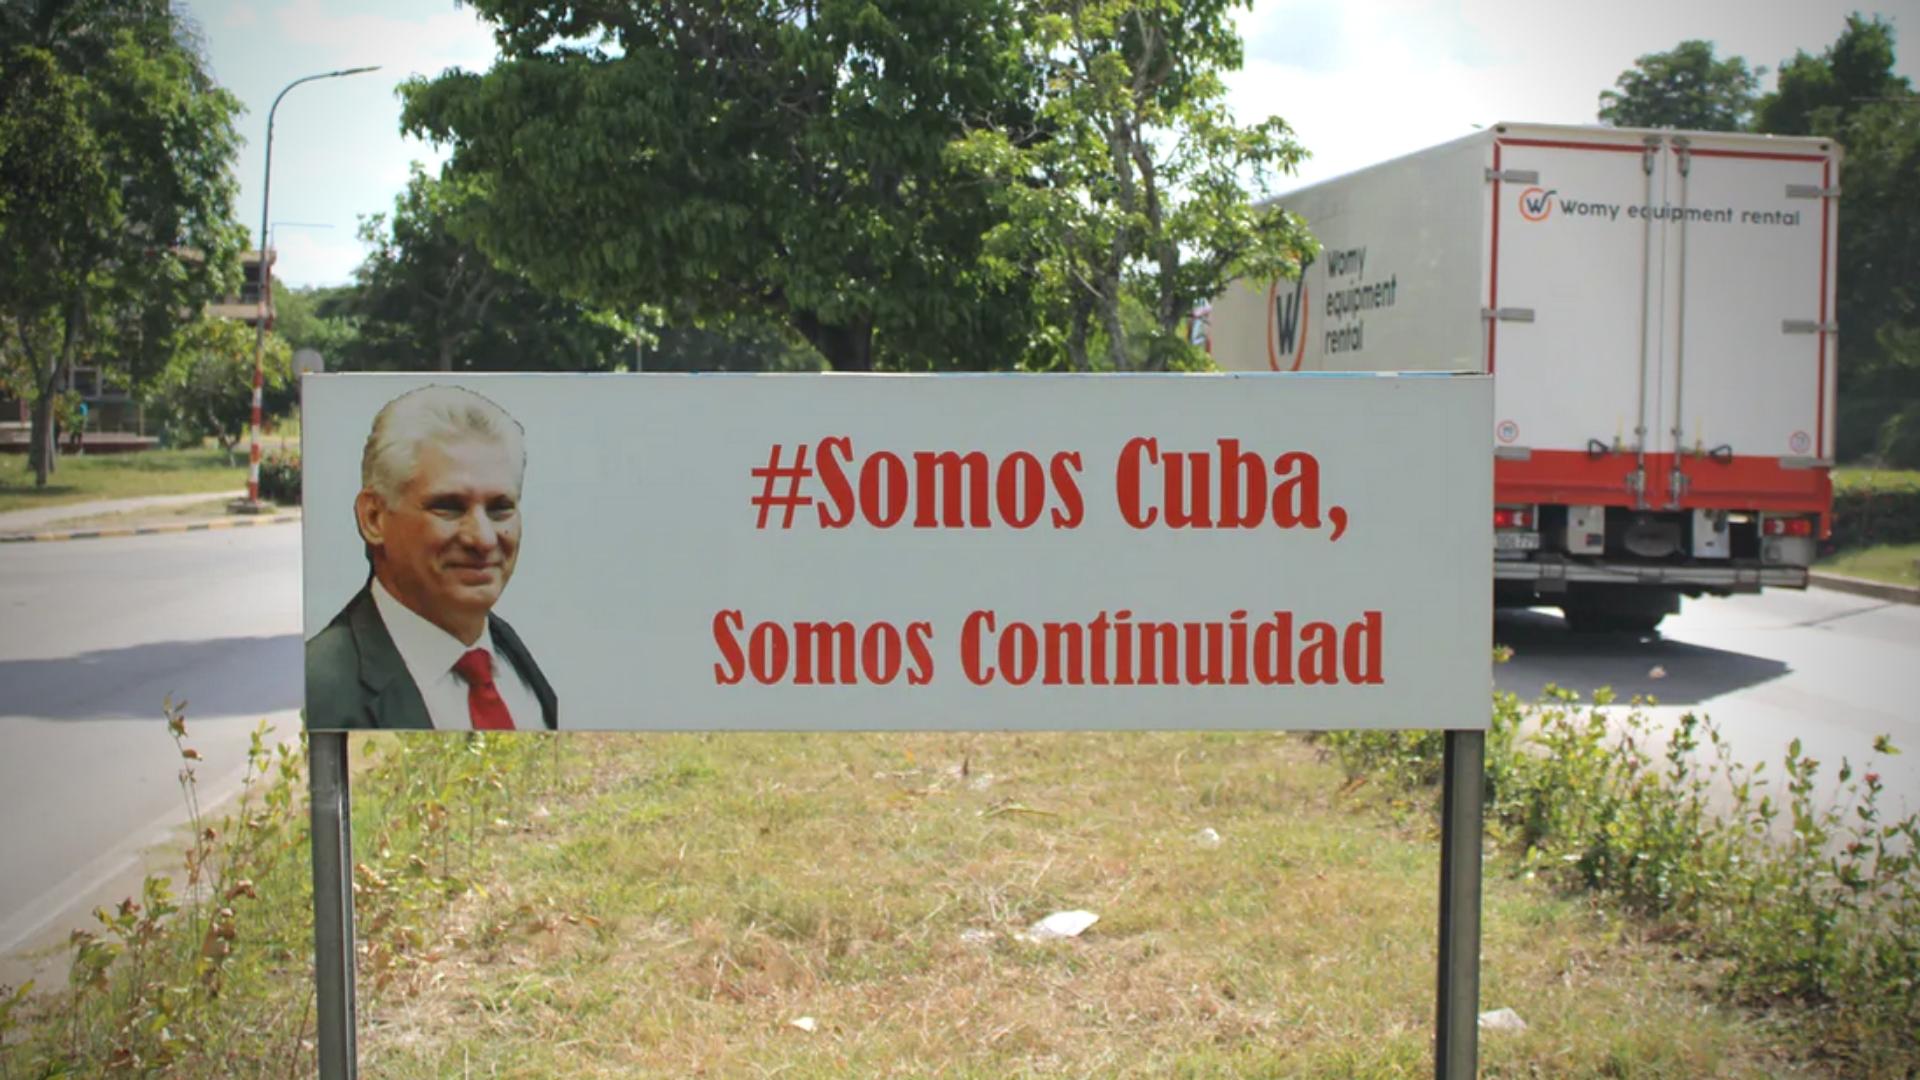 Cartel de propaganda comunista en Cuba. Foto: Shutterstock